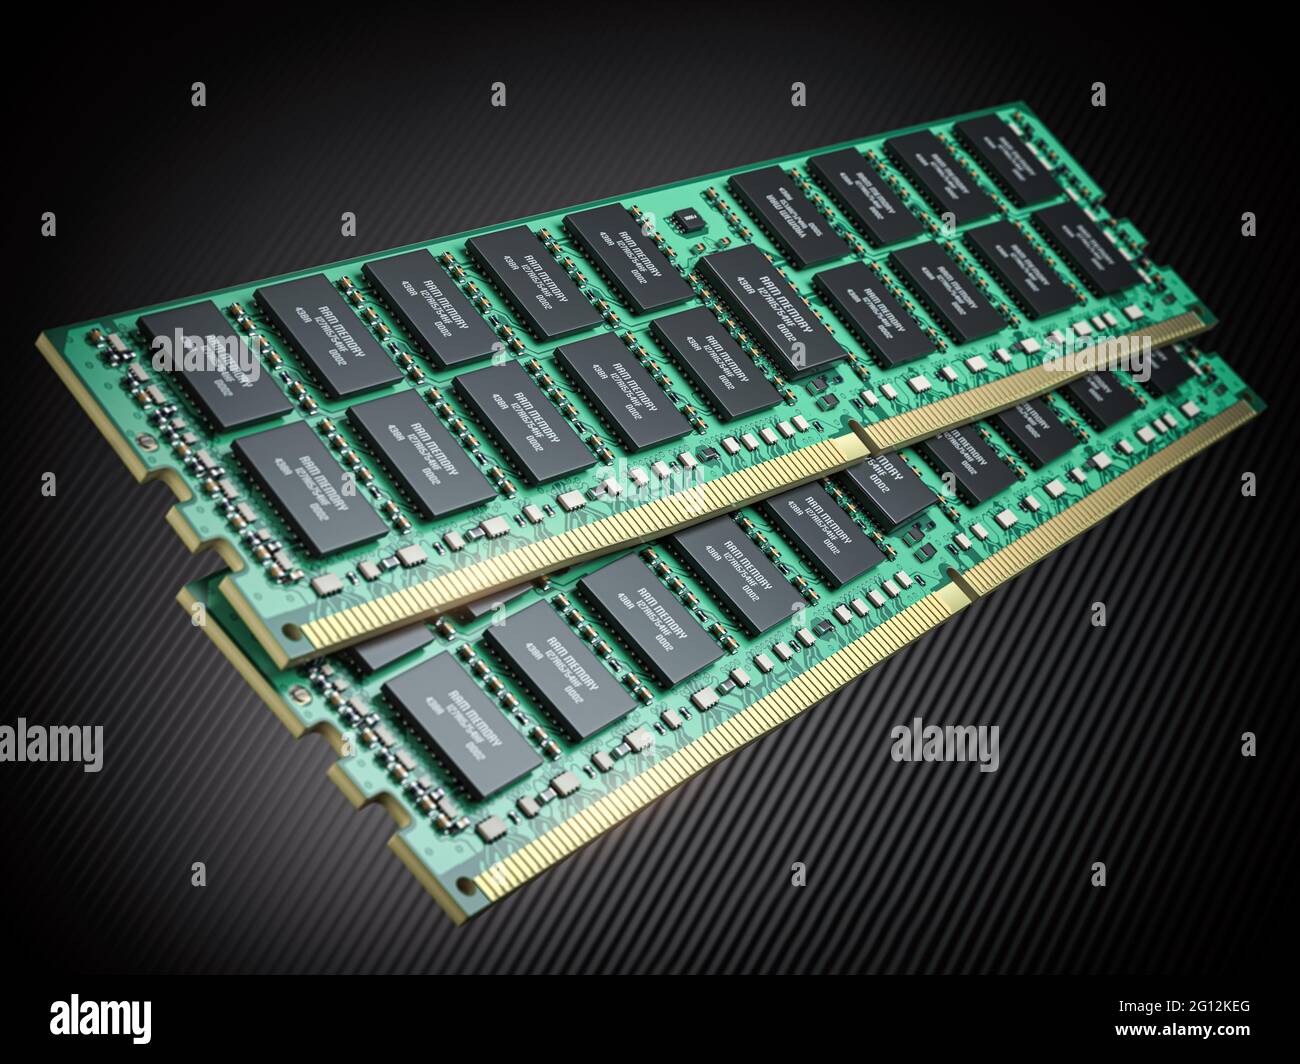 DDR ram computer memory modules on black background. 3d illustration. Stock Photo